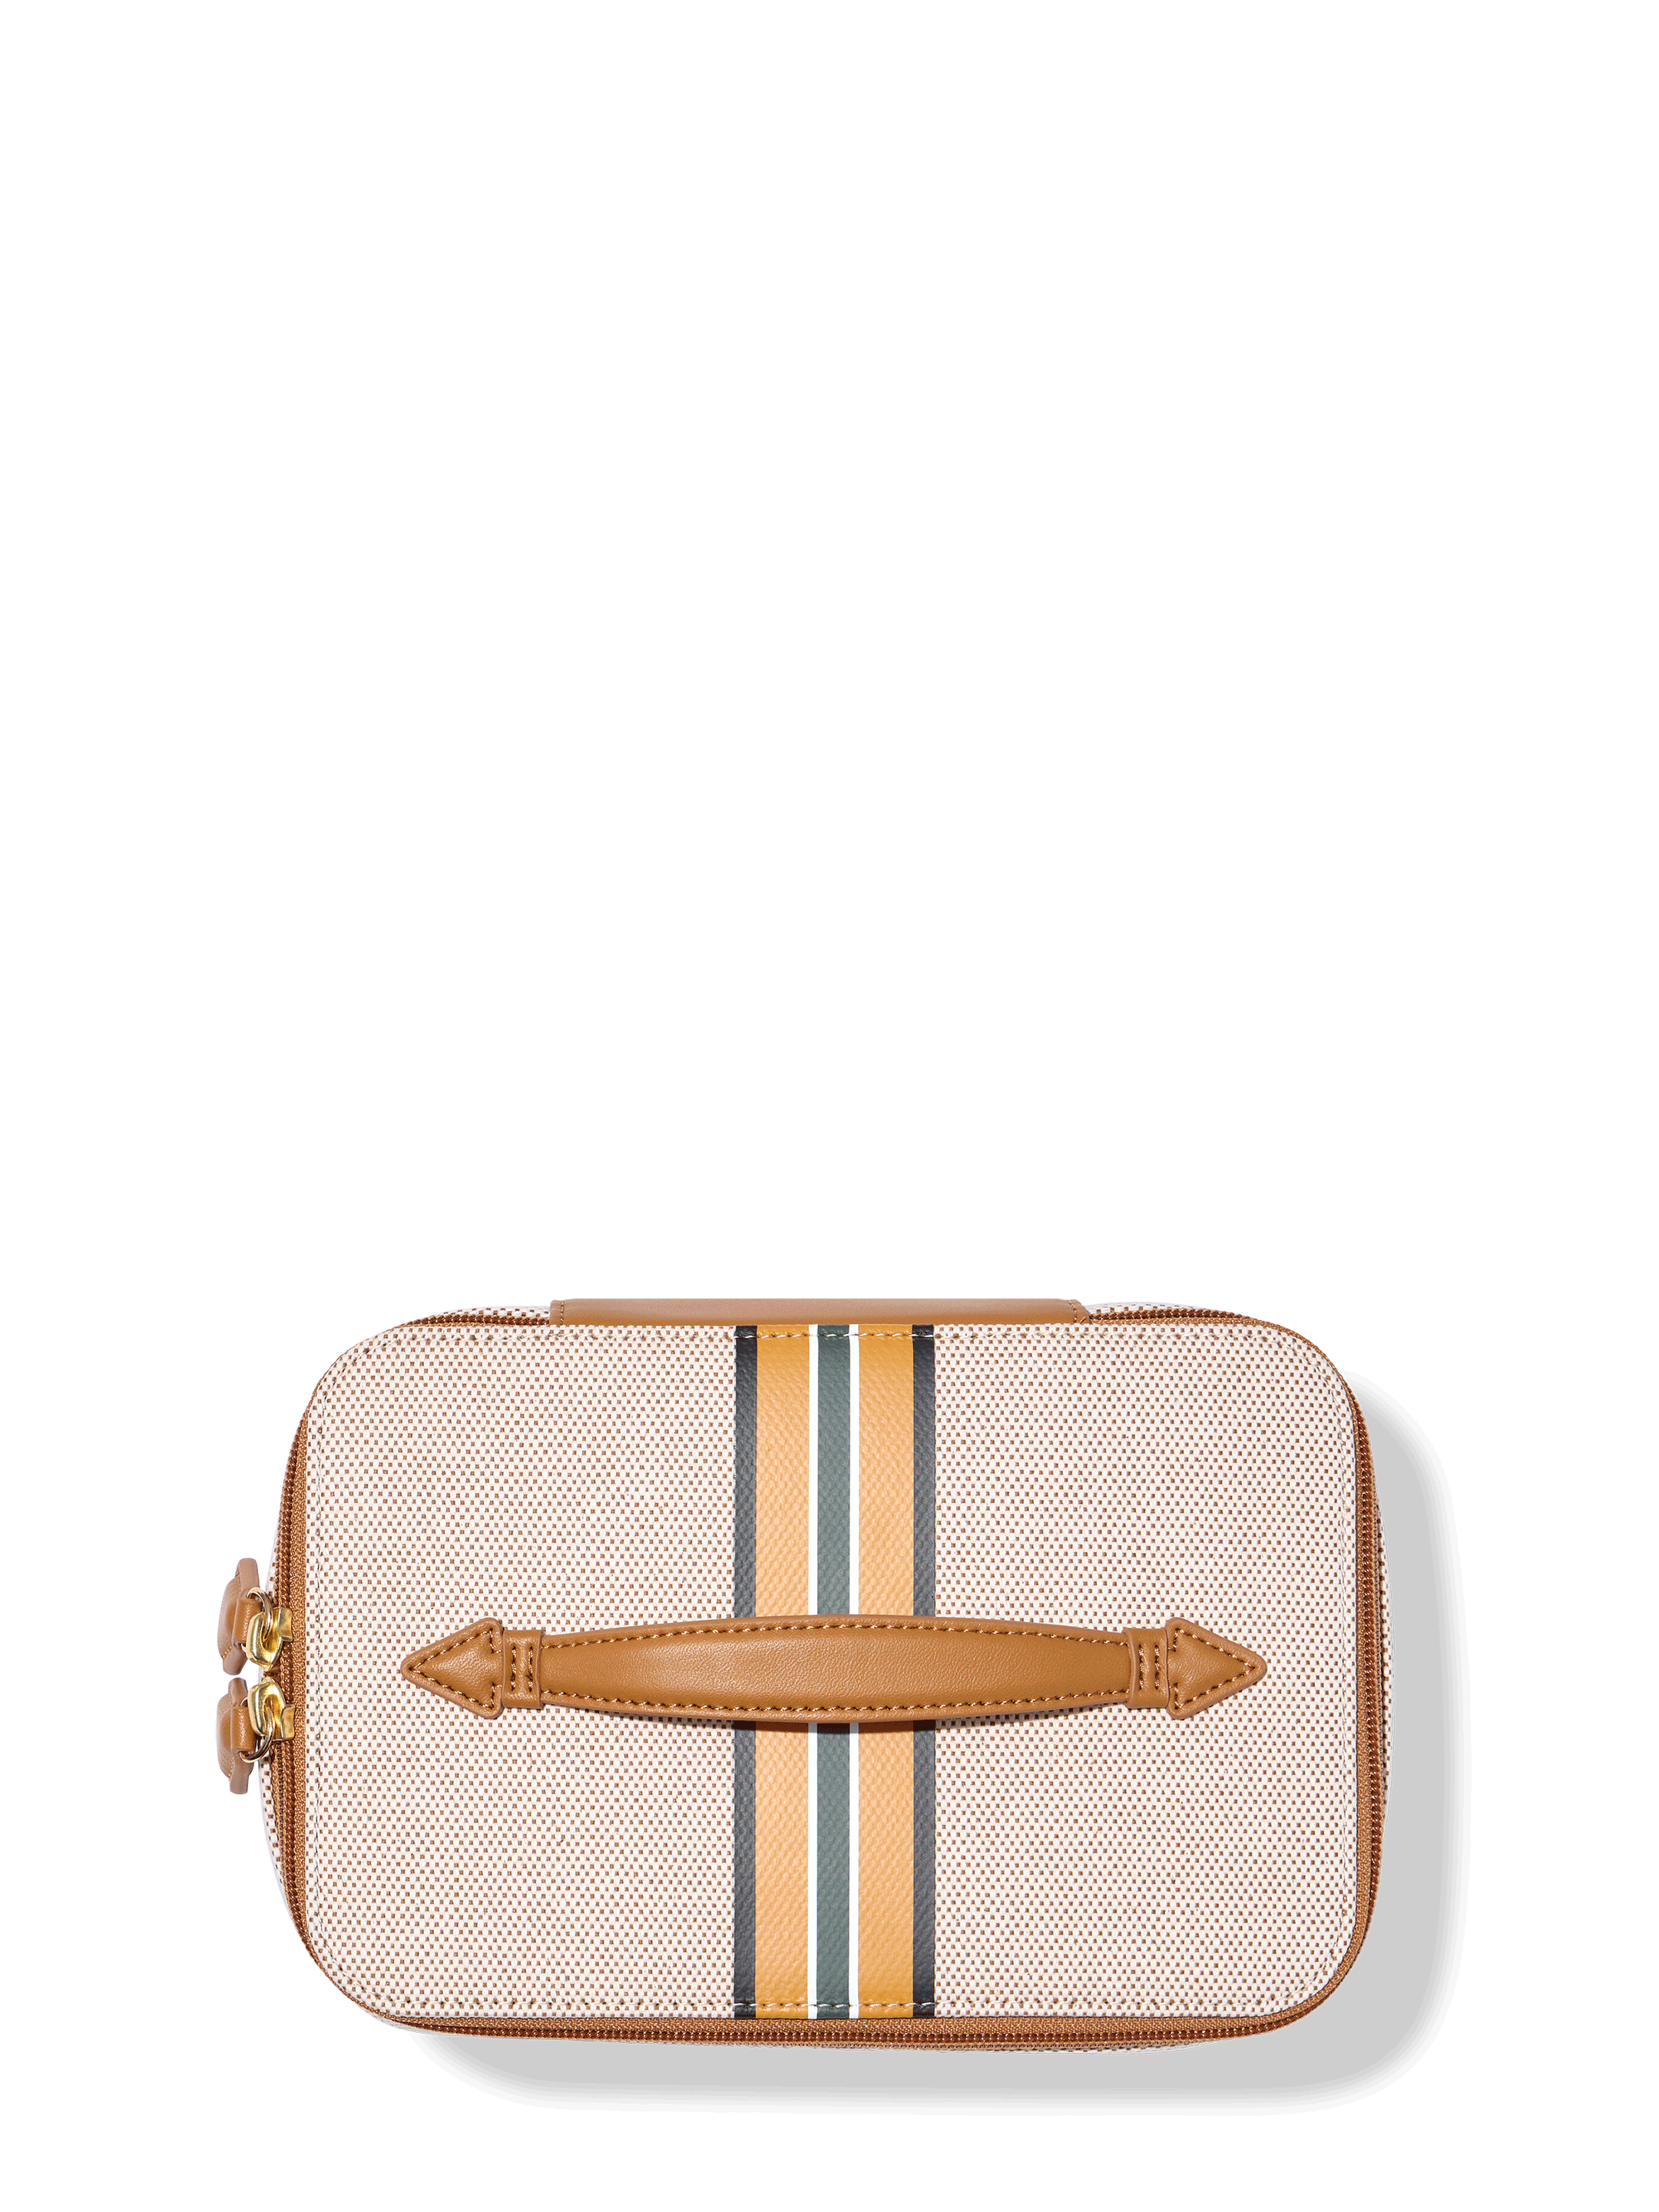 Create a Louis Vuitton PVC Bag With This TikTok DIY